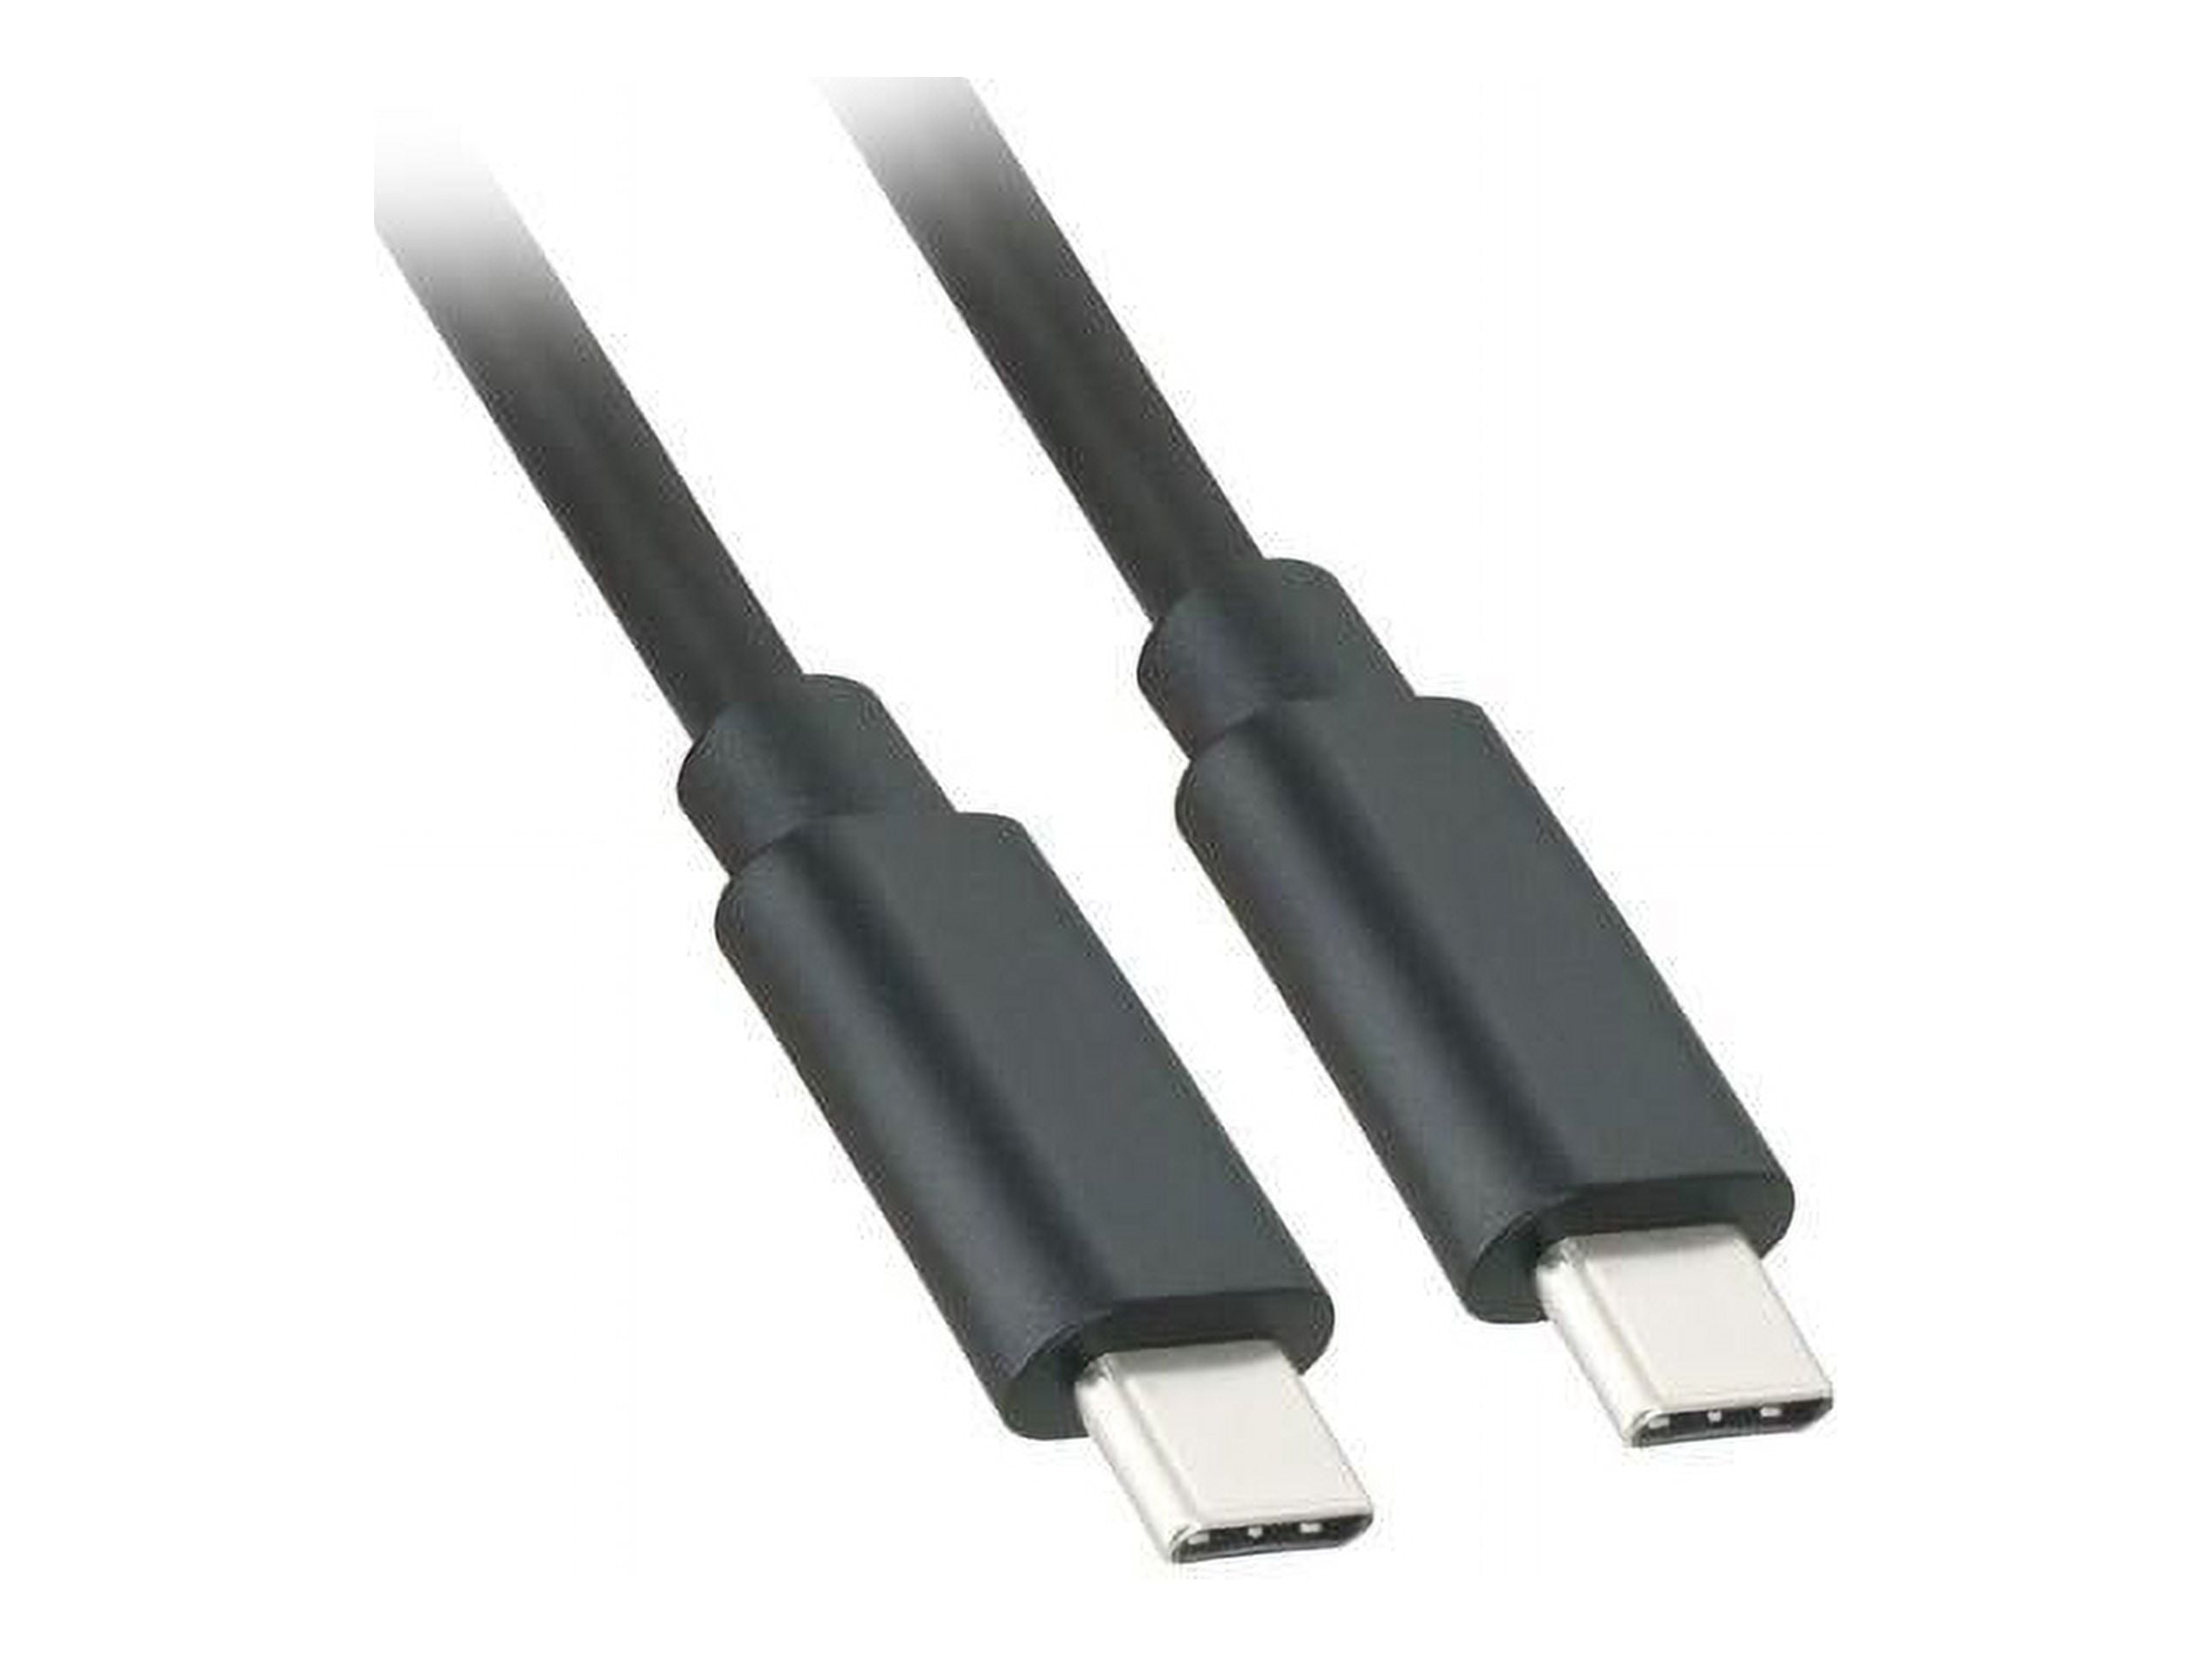 Cable OTG micro USB Nippon América